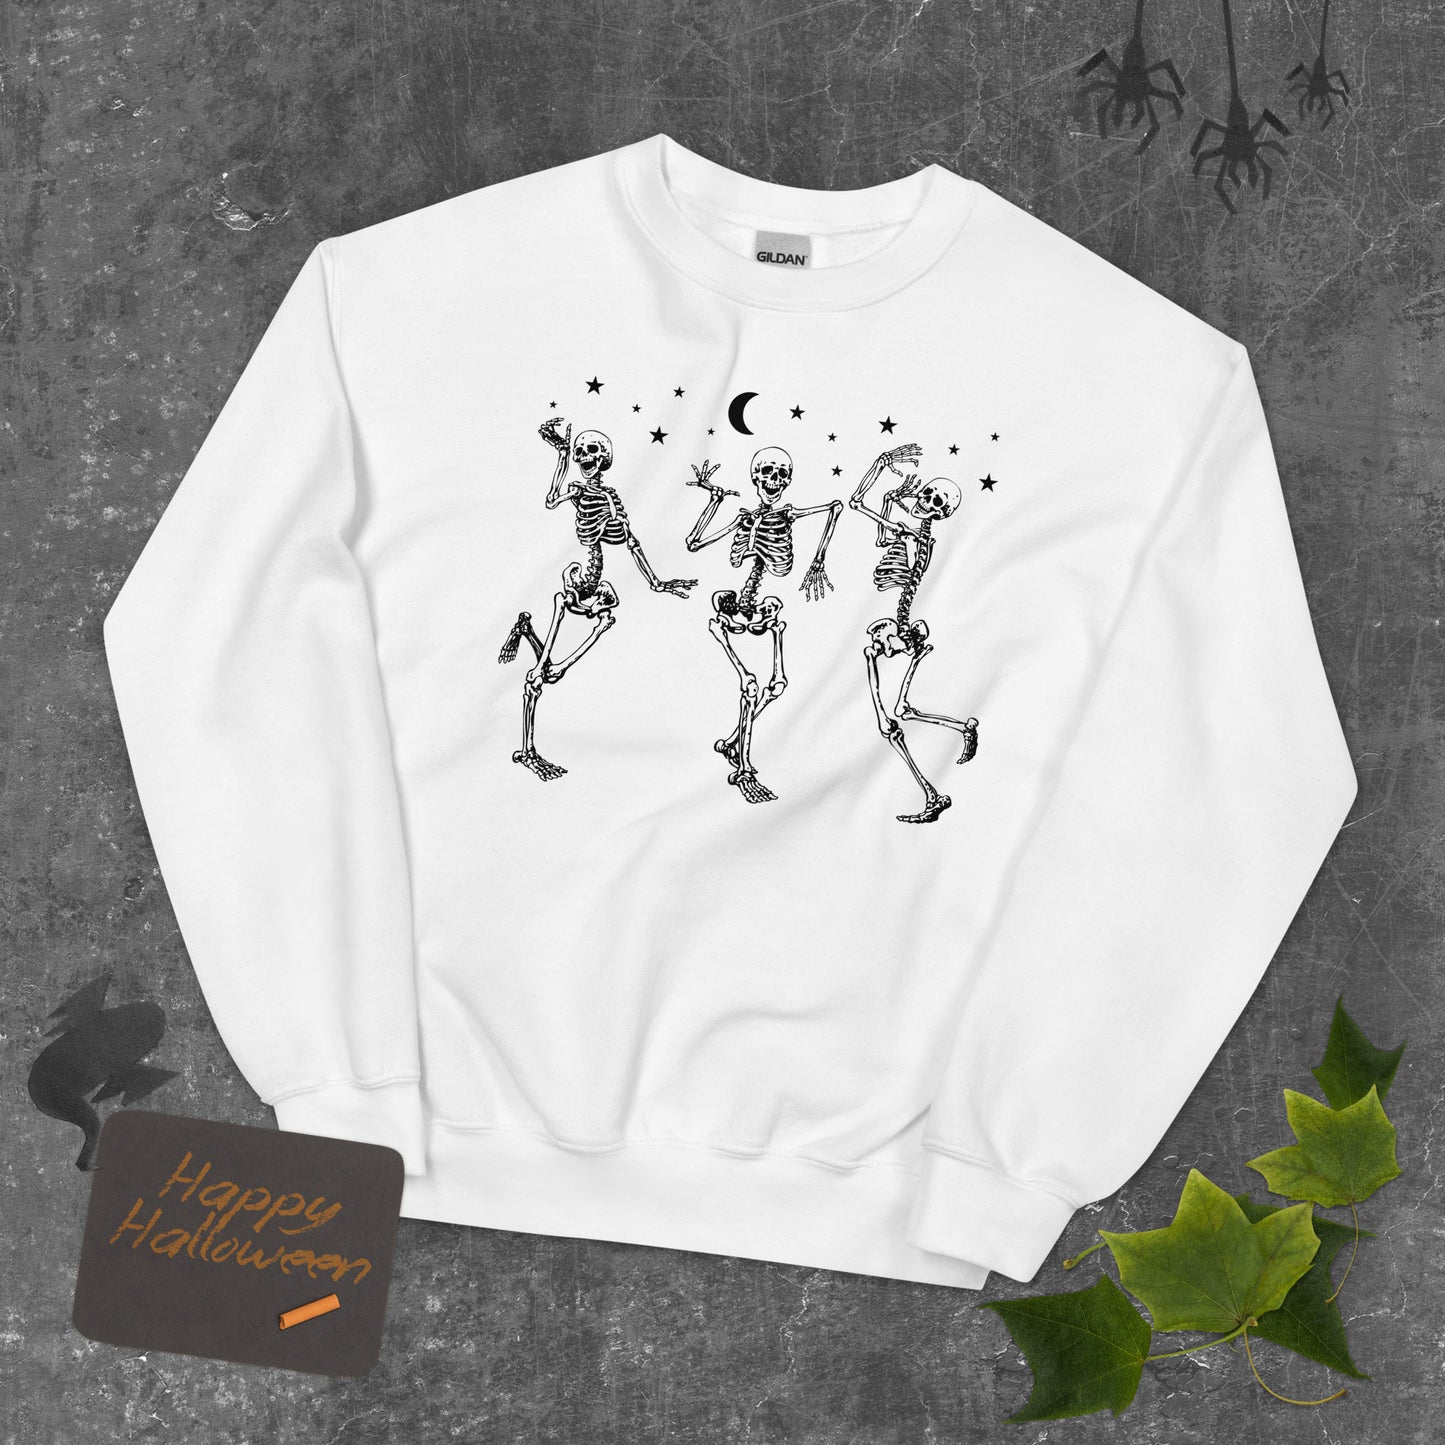 Dancing Skeletons - Unisex Sweatshirt